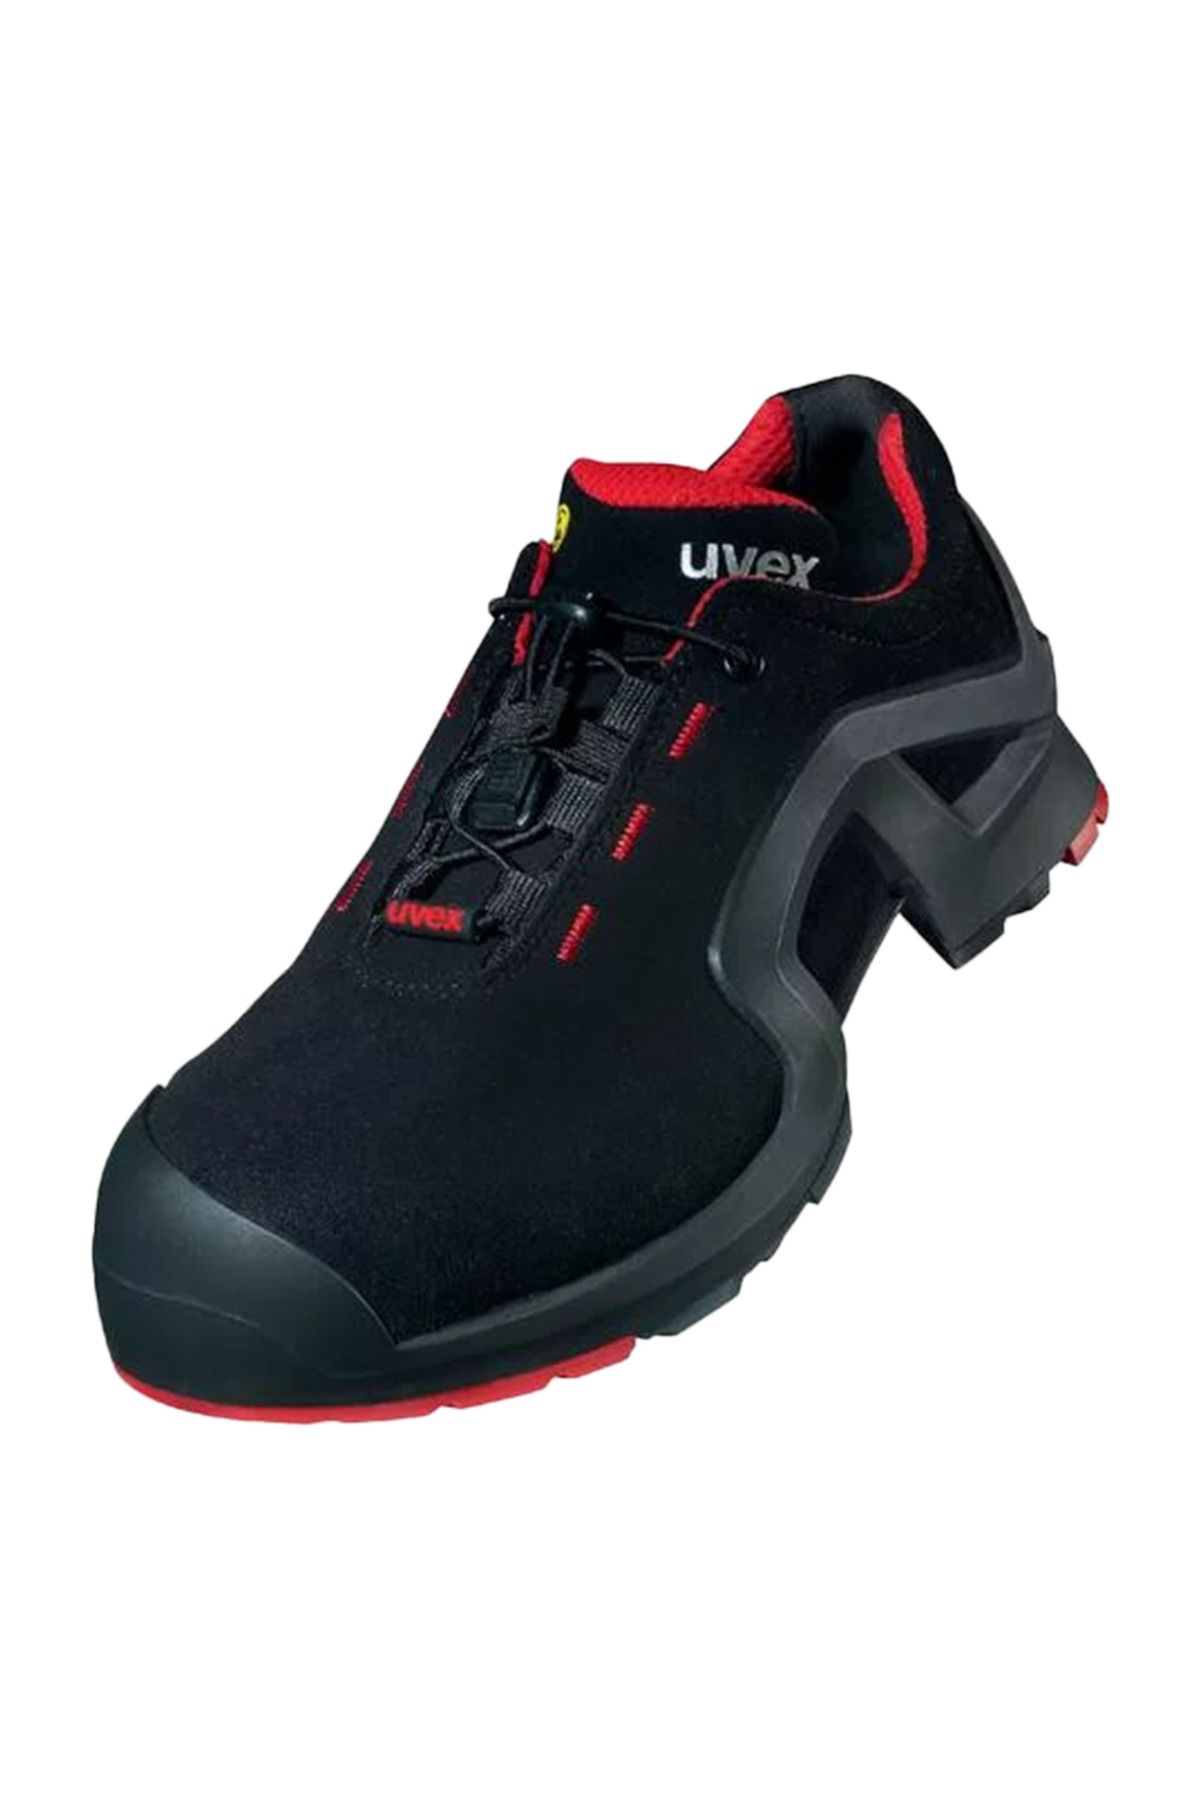 Uvex 8516 S3 X-tended Support Esd Src Ithal Iş Güvenliği Ayakkabısı